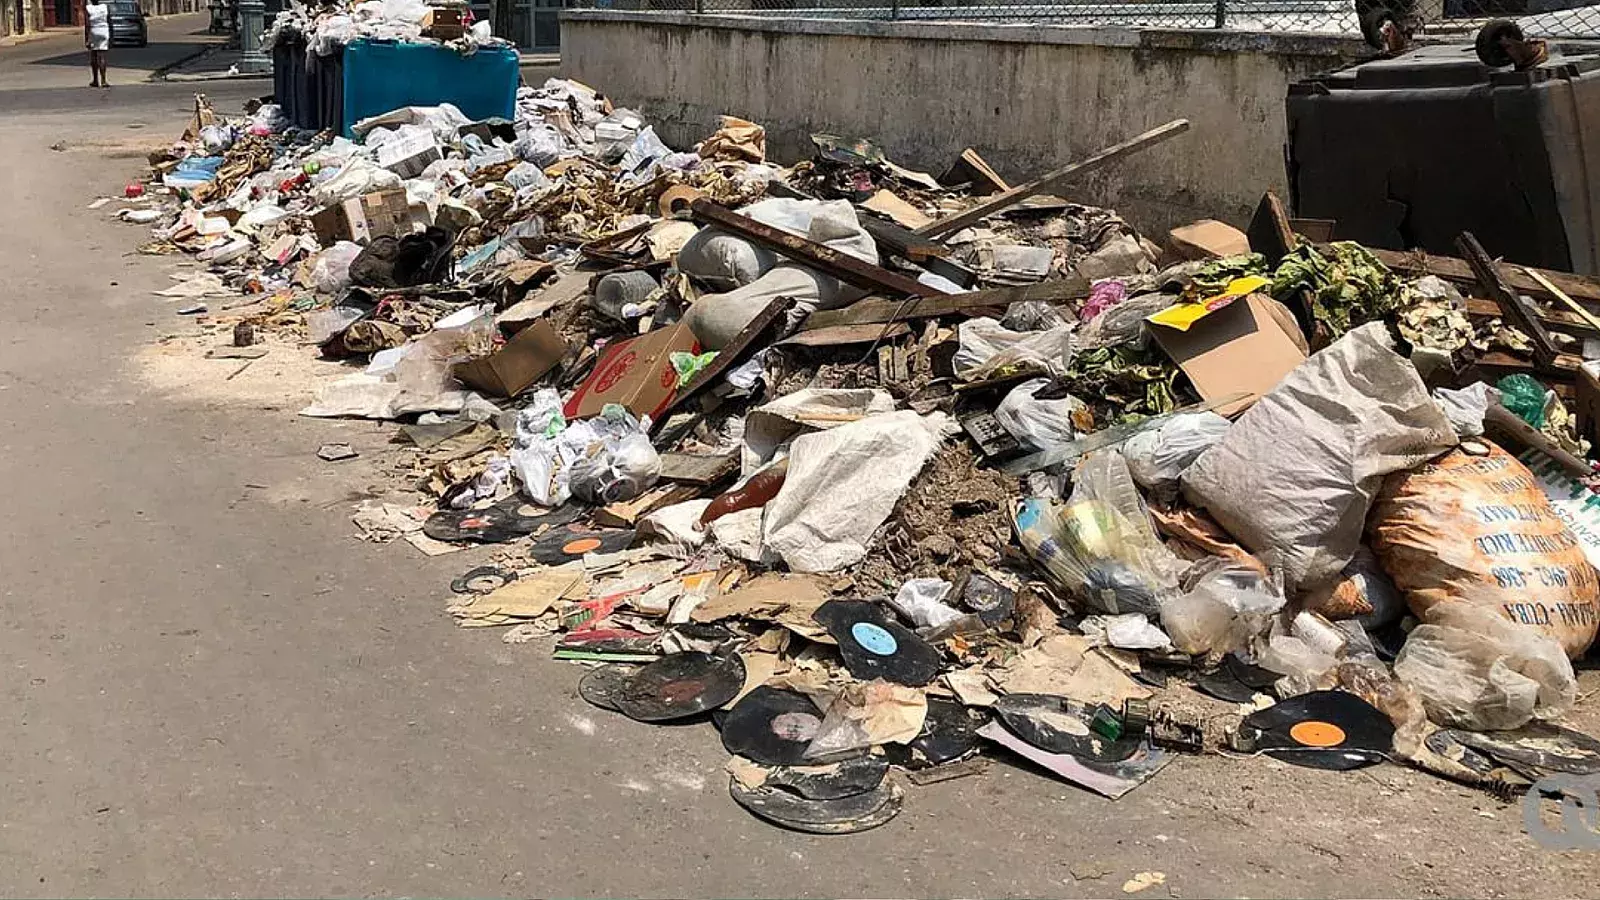 Imagen de basura en calles cubanas